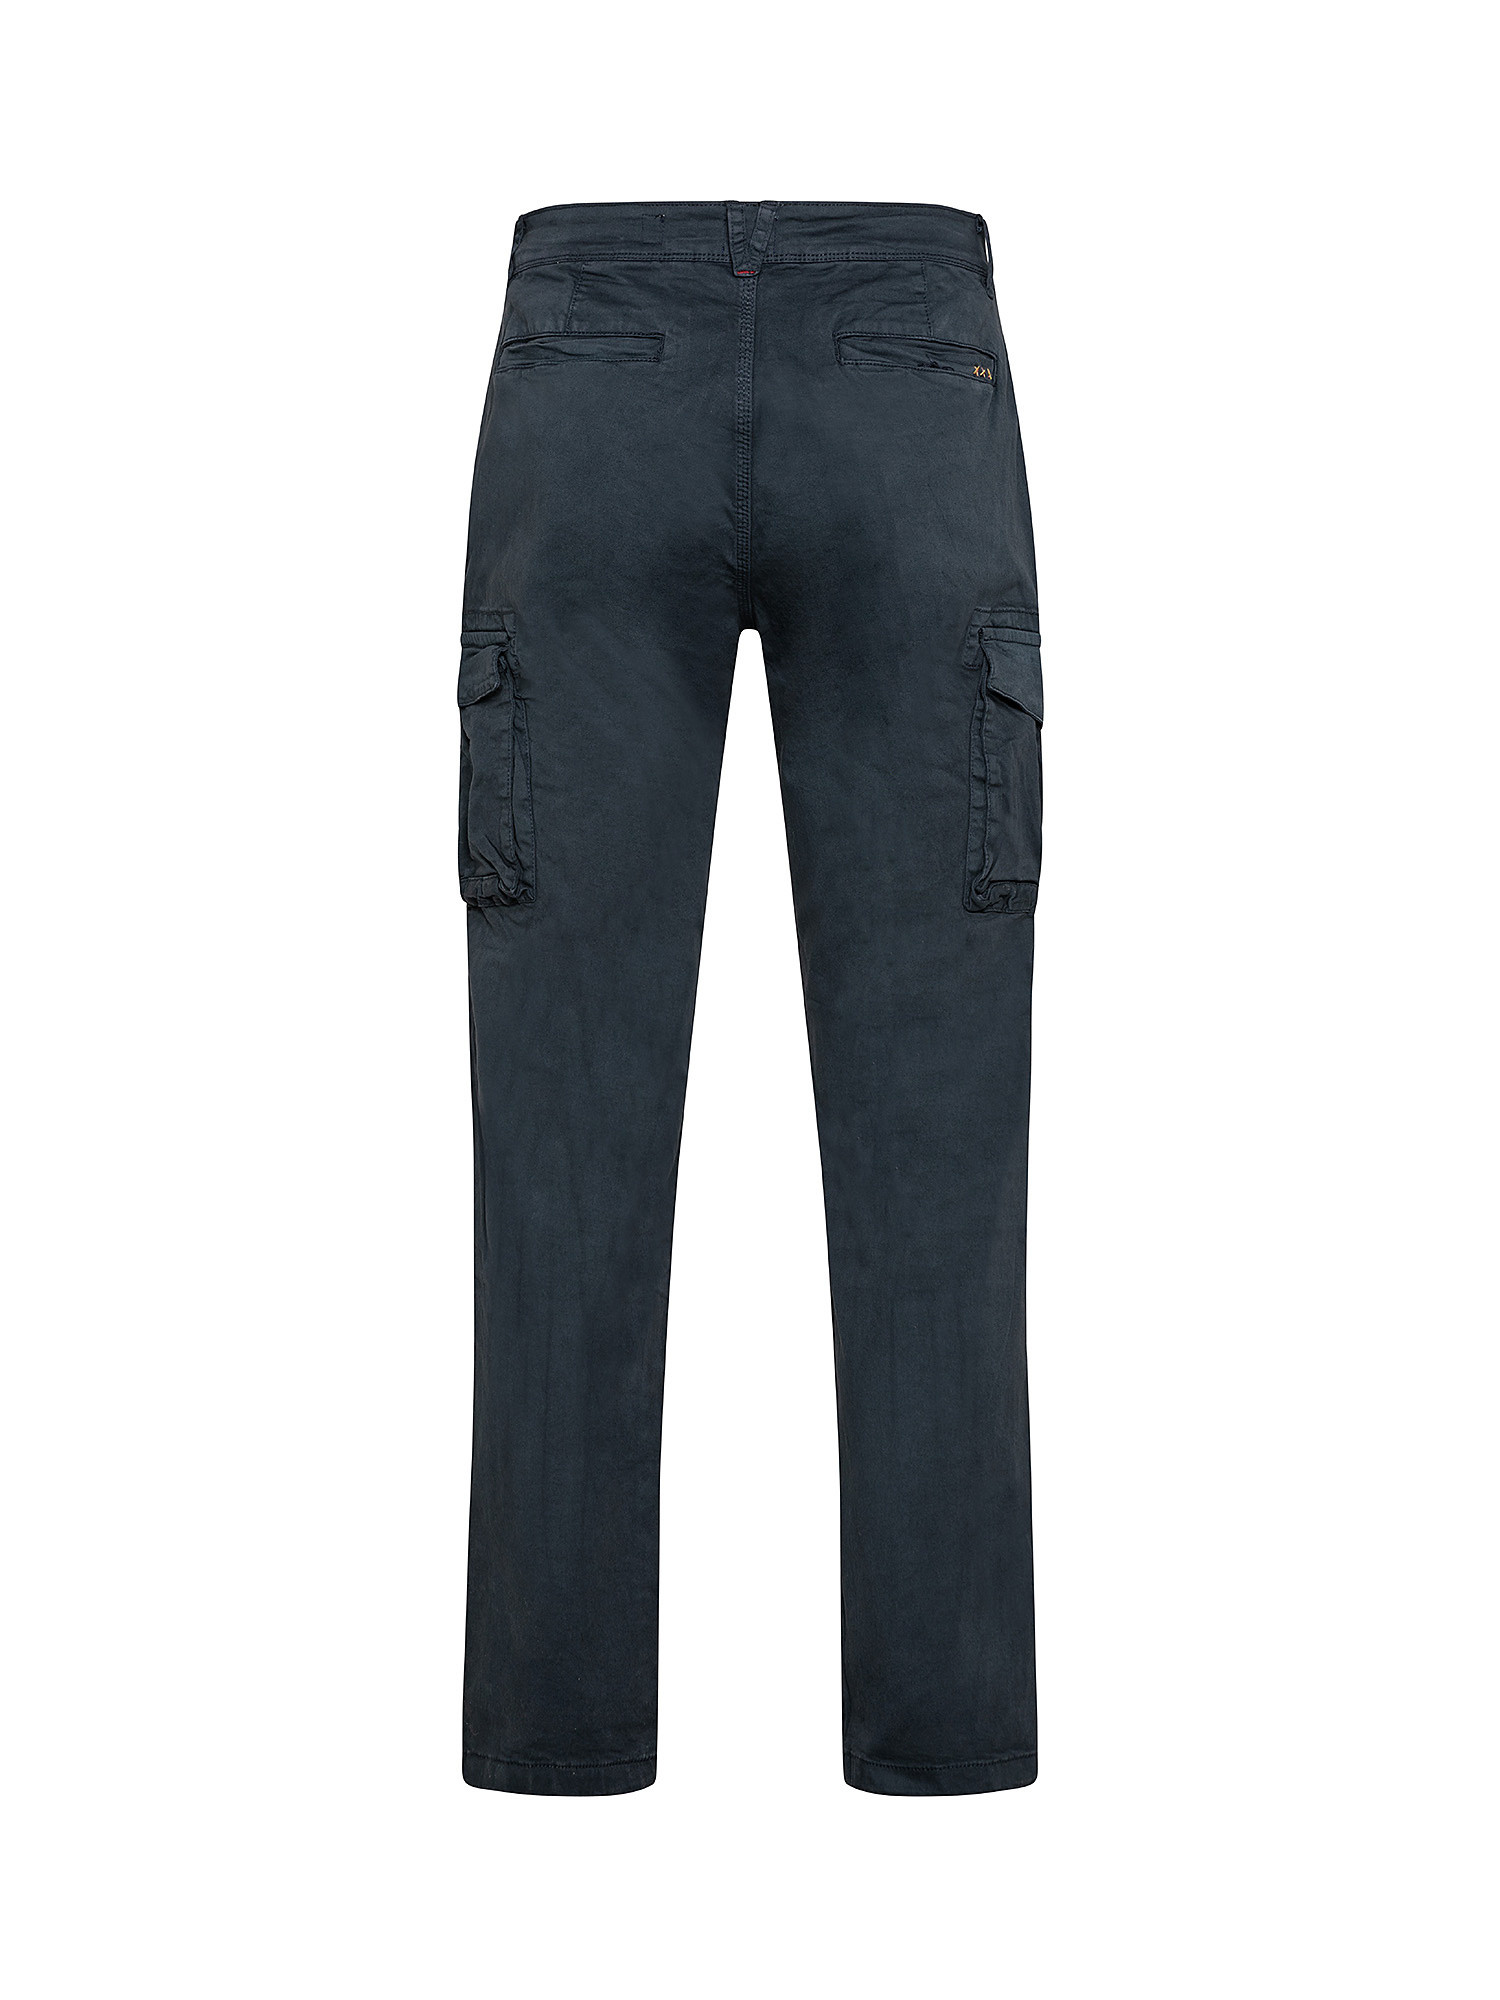 Pantalone cargo cotone stretch, Blu, large image number 1